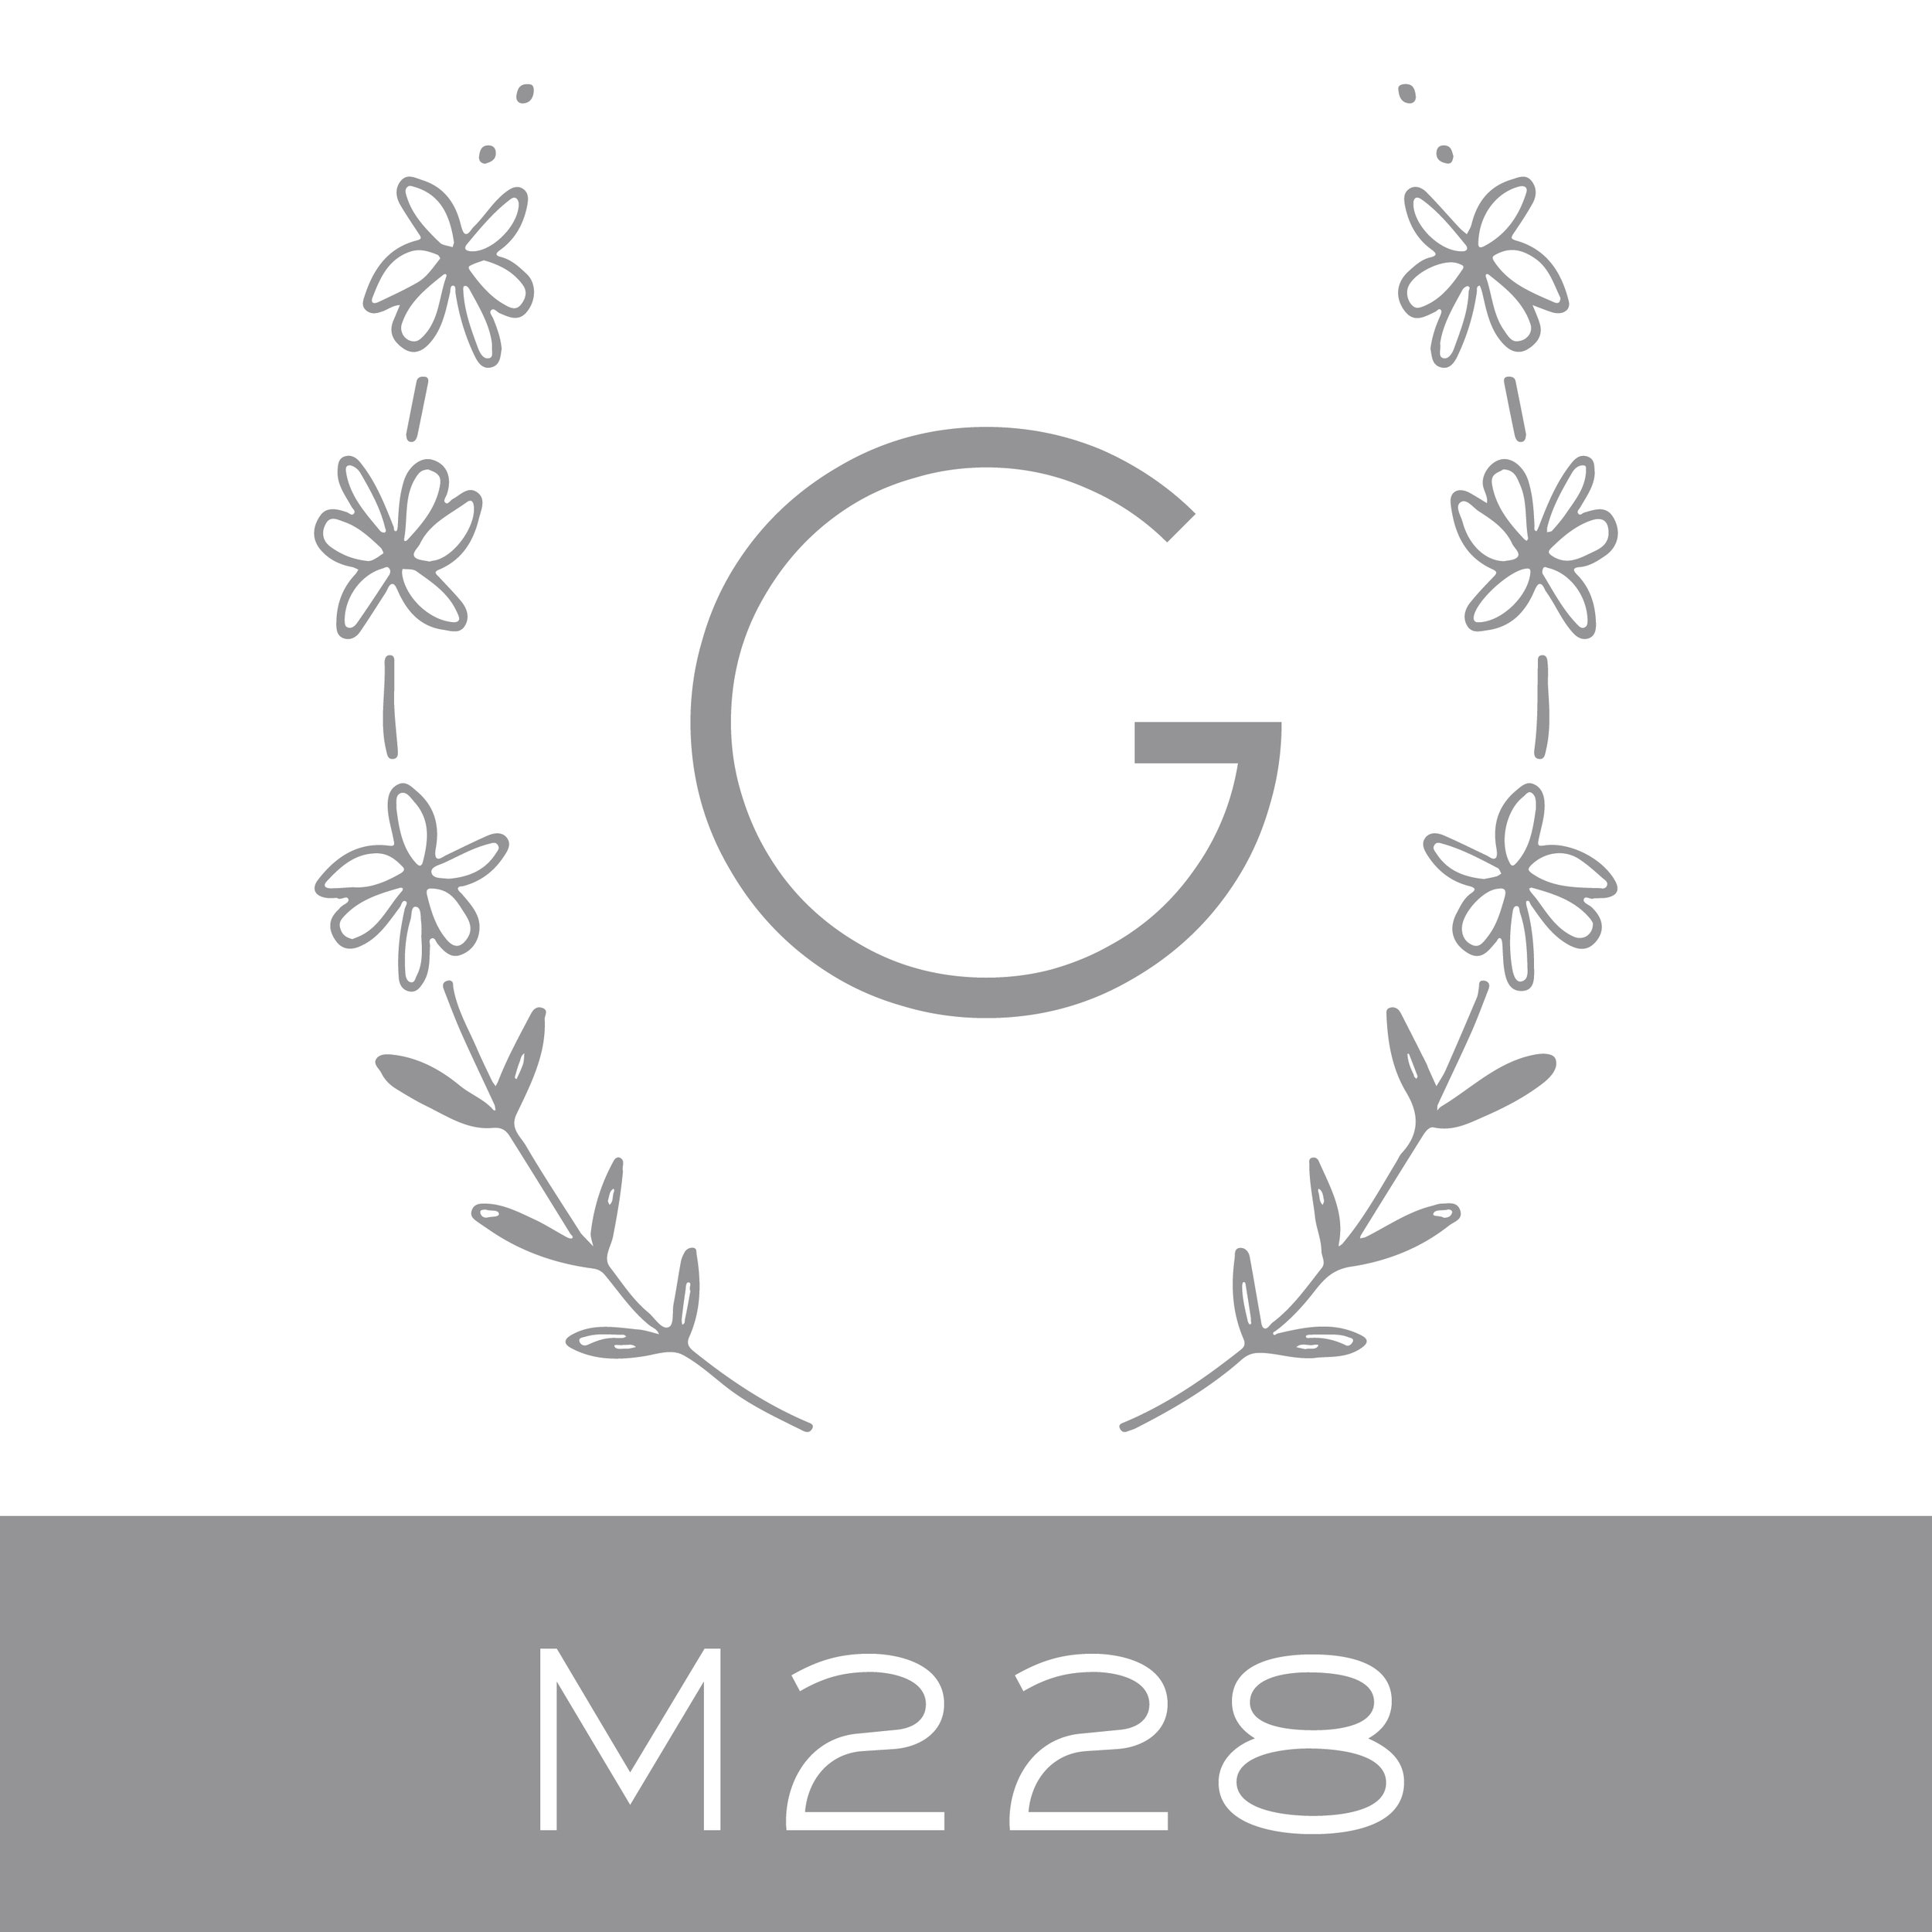 M228.jpg